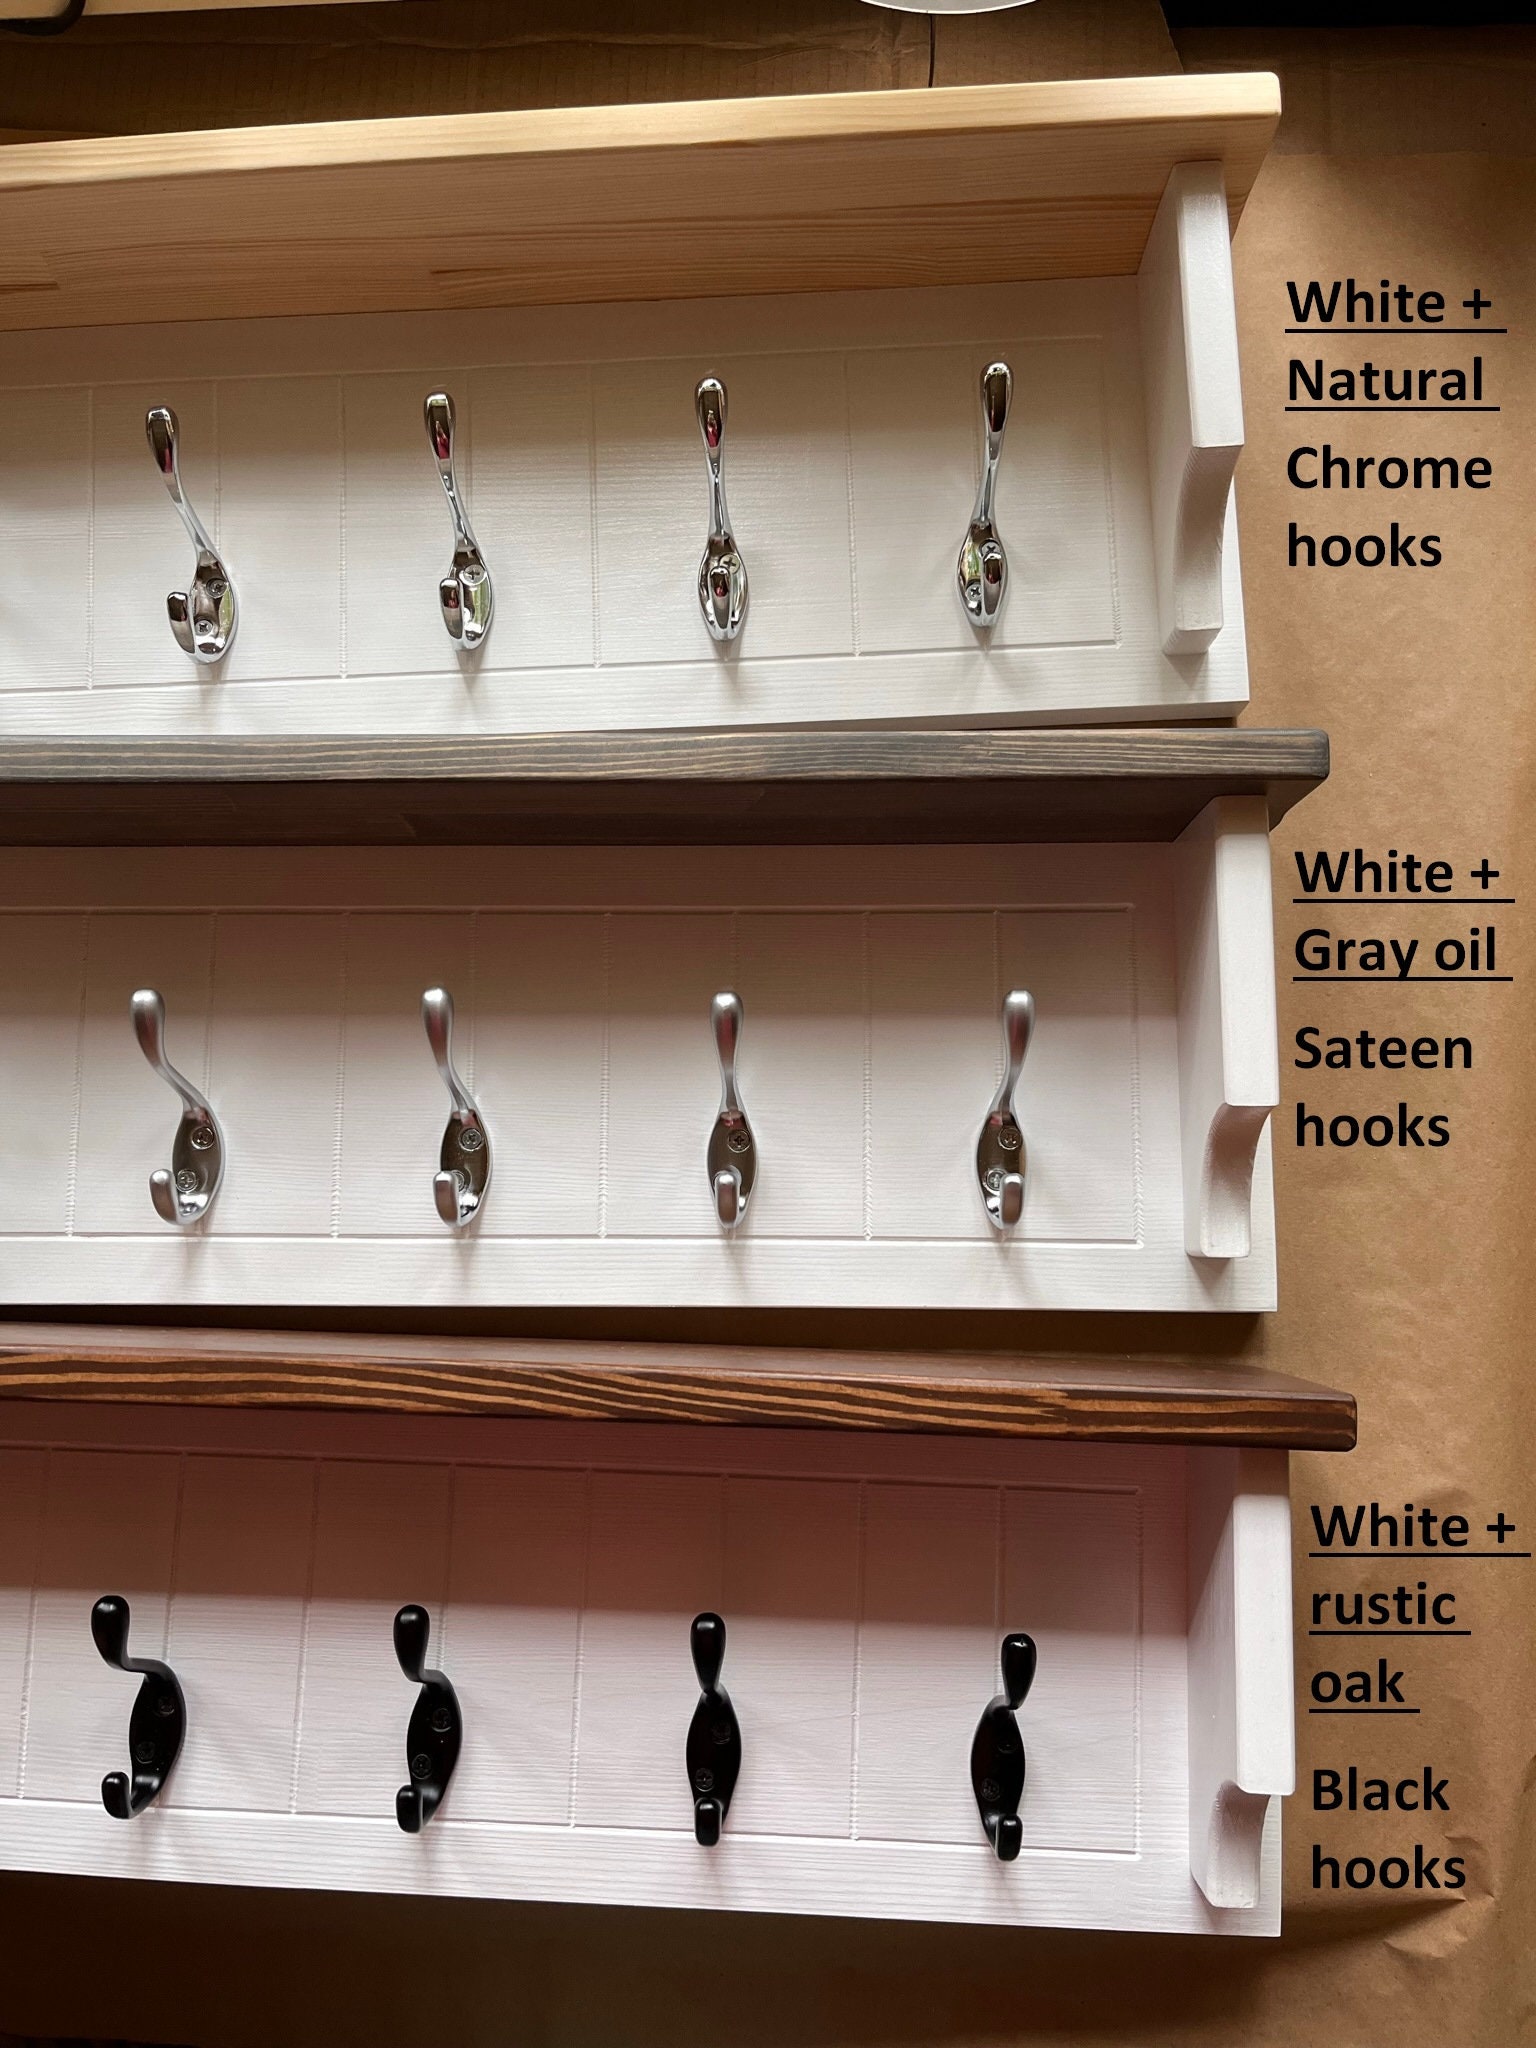 VERTORGAN Coat Hooks, Wood Rack Wall-Mounted, 31.5 Inch Entryway Shelf with  10 Hooks (Brown)